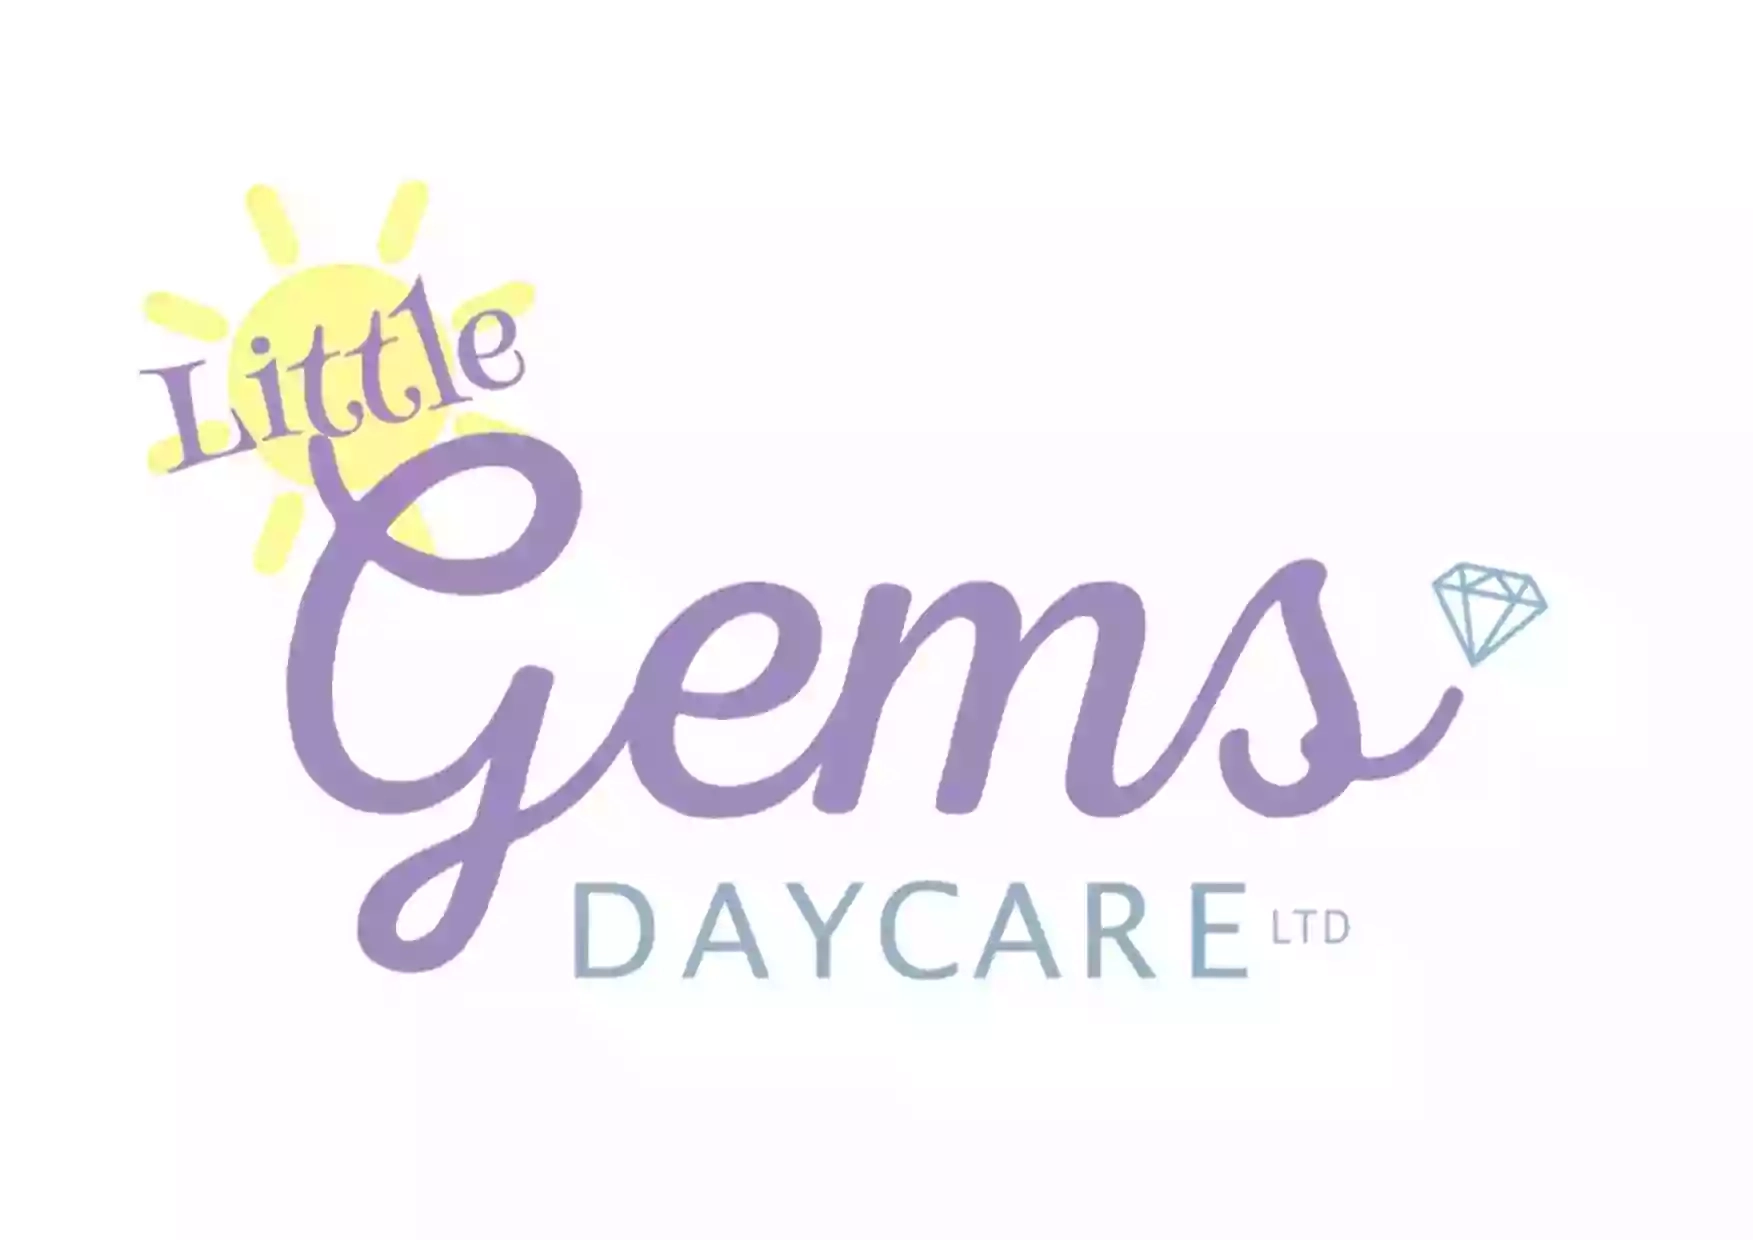 Little Gems Daycare Ltd